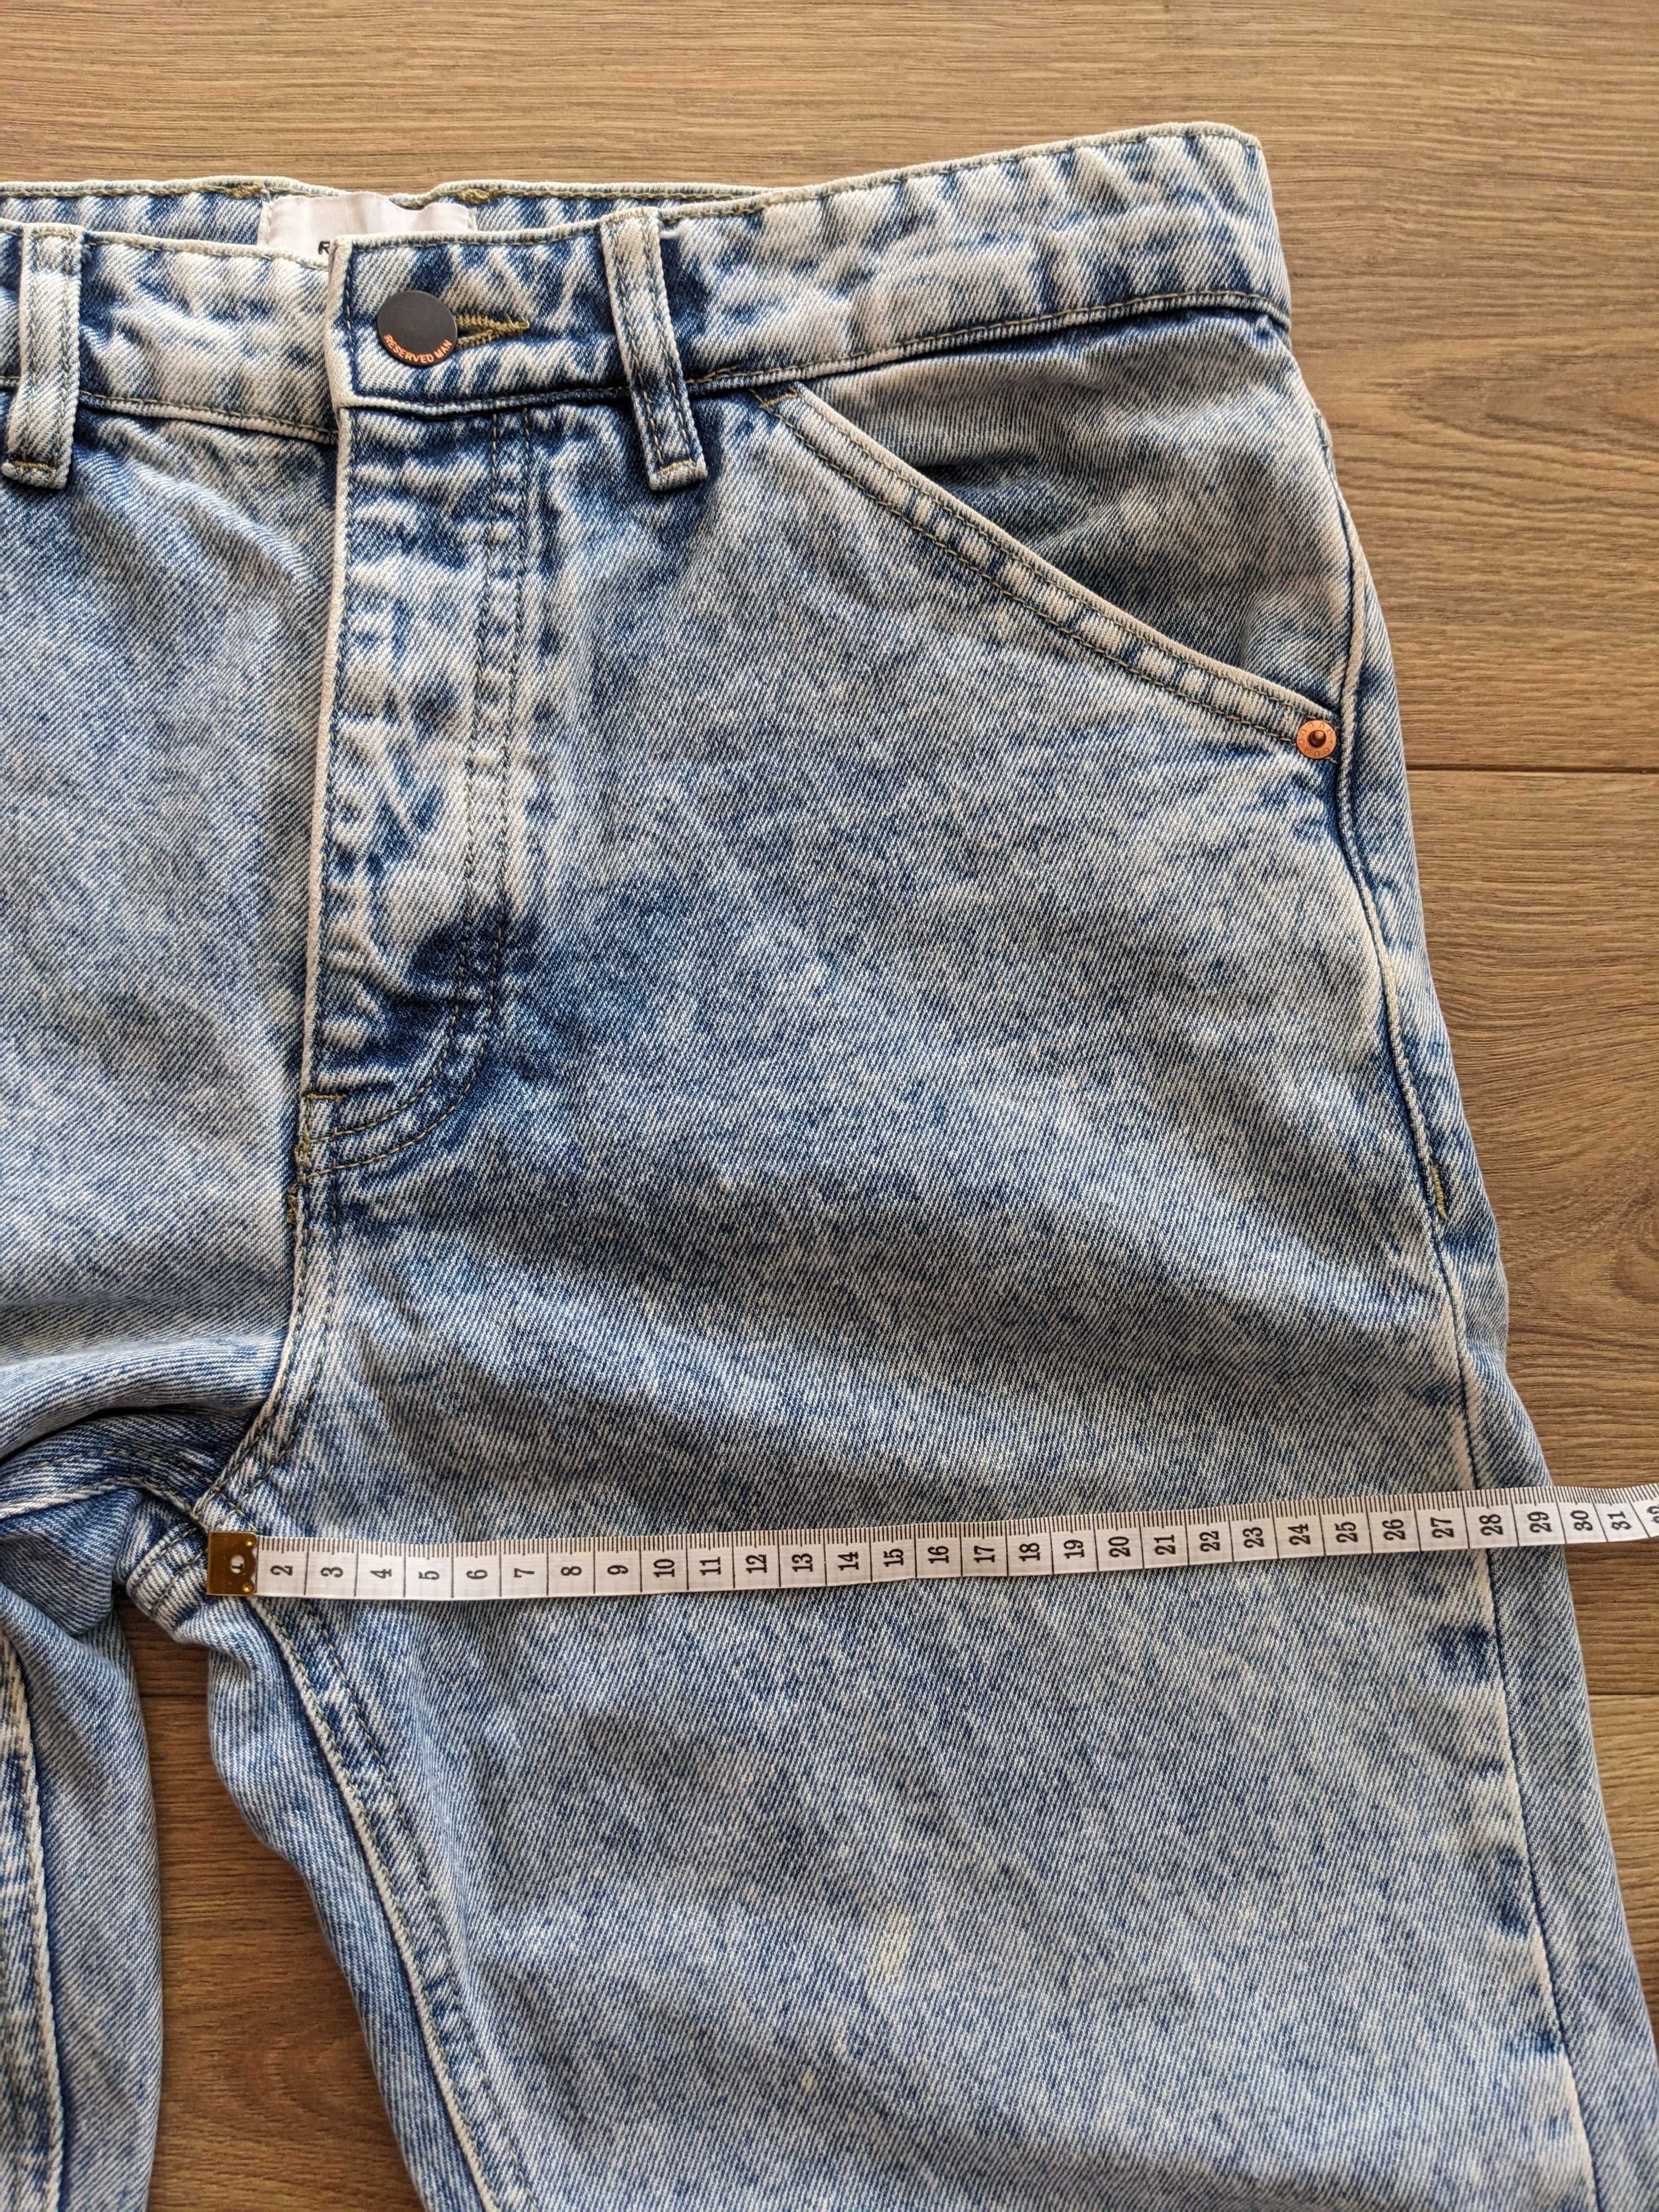 Męskie jeansy Reserved niebieskie spodnie rozm. 31